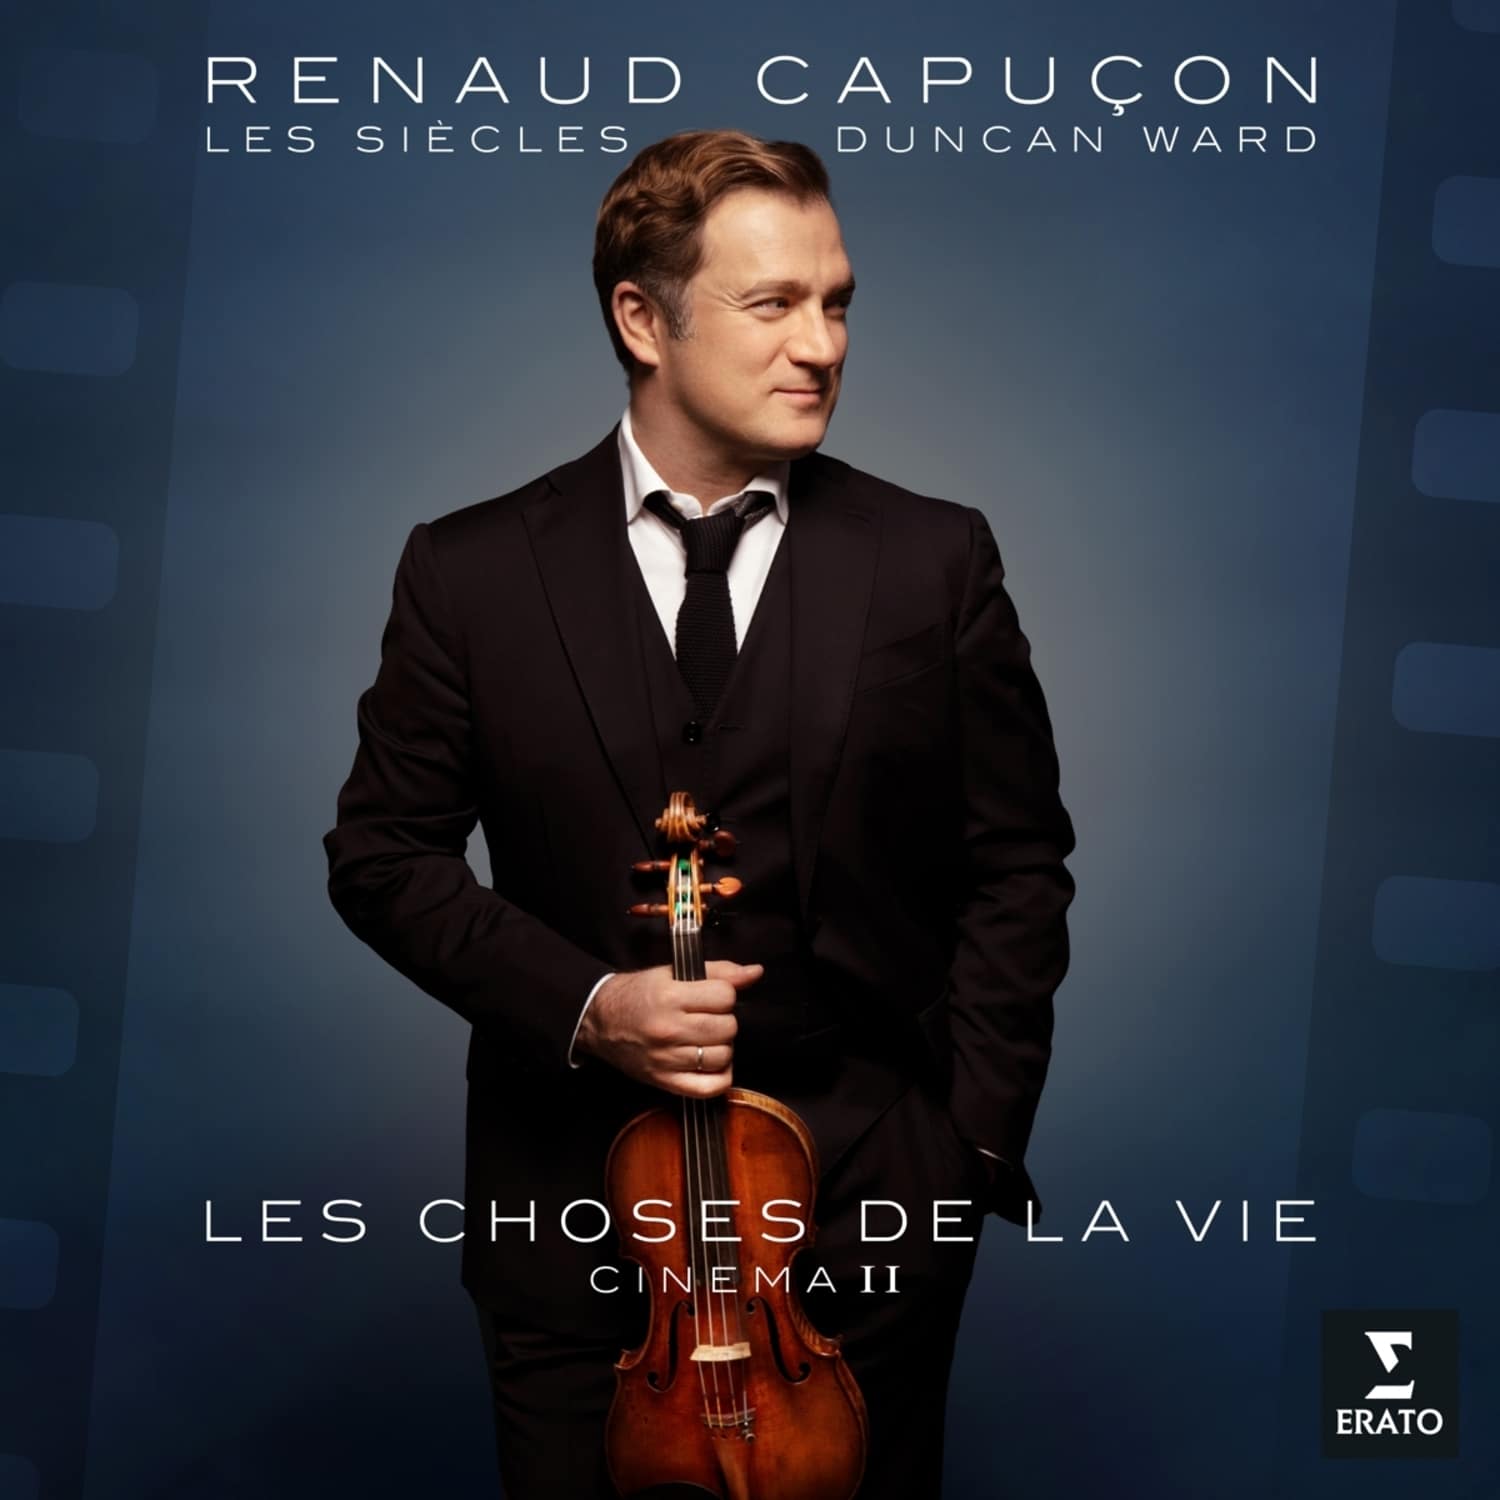 Renaud Capucon / Les Sicles / Duncan Ward - CINEMA II 